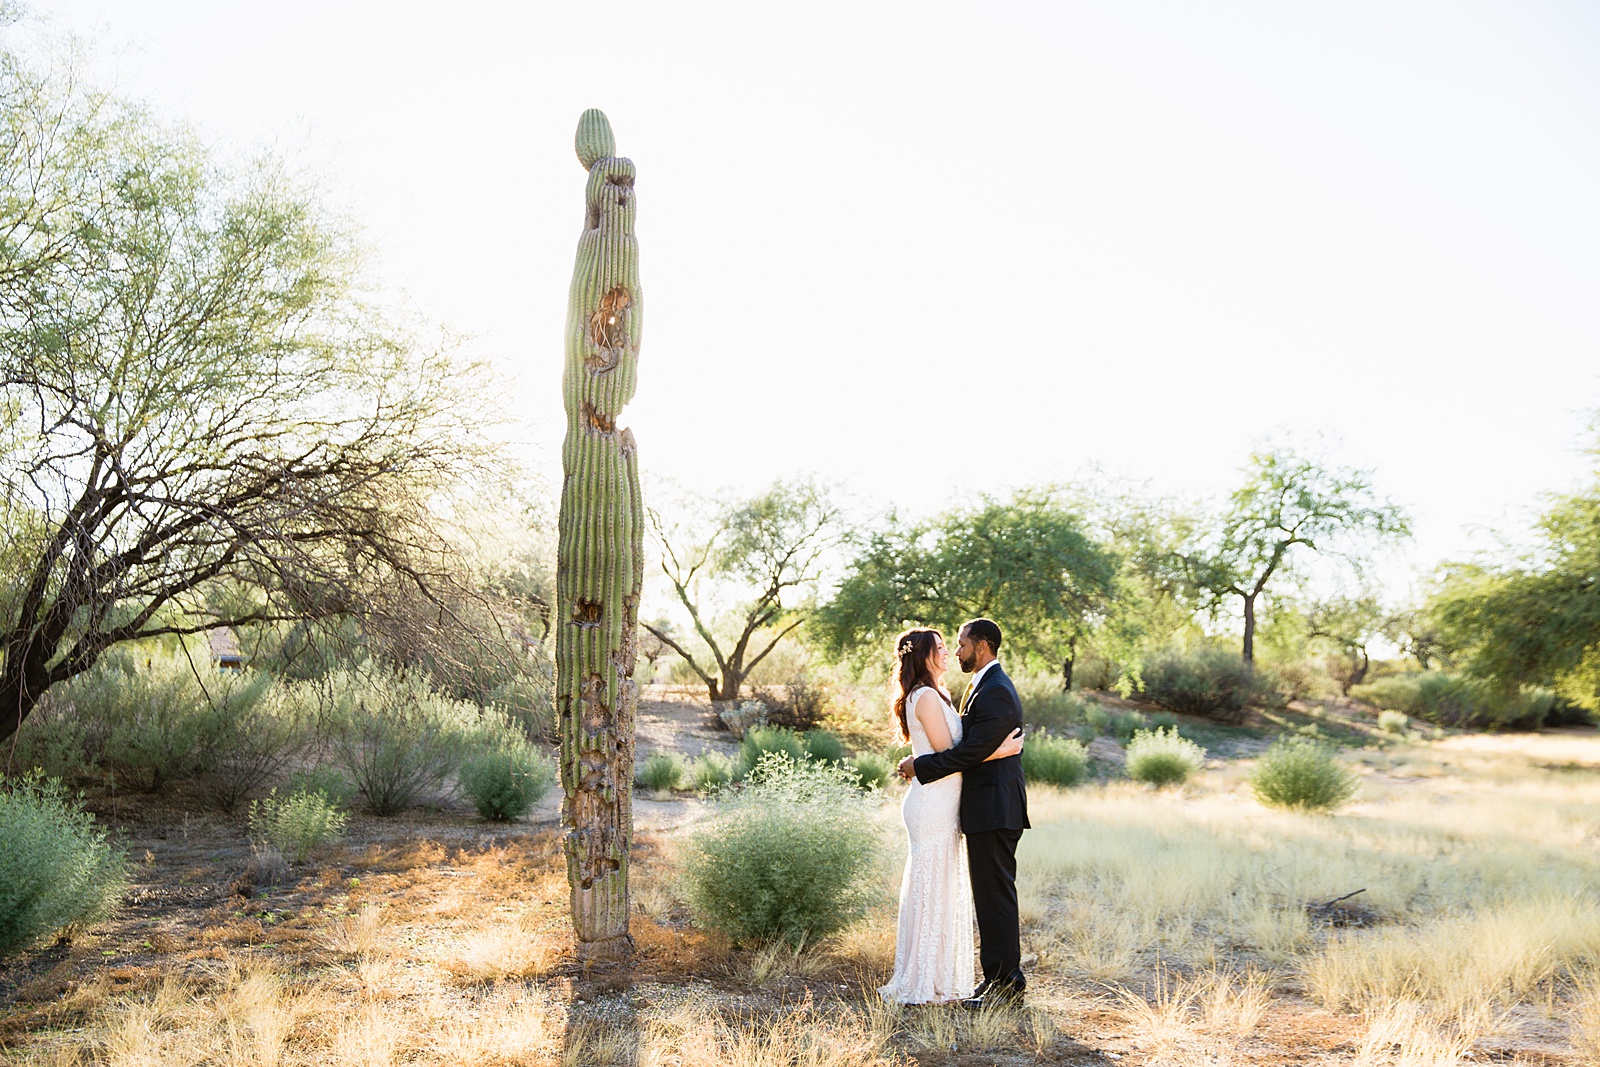 Bride and groom pose during their Backyard Micro wedding by Arizona wedding photographer PMA Photography.